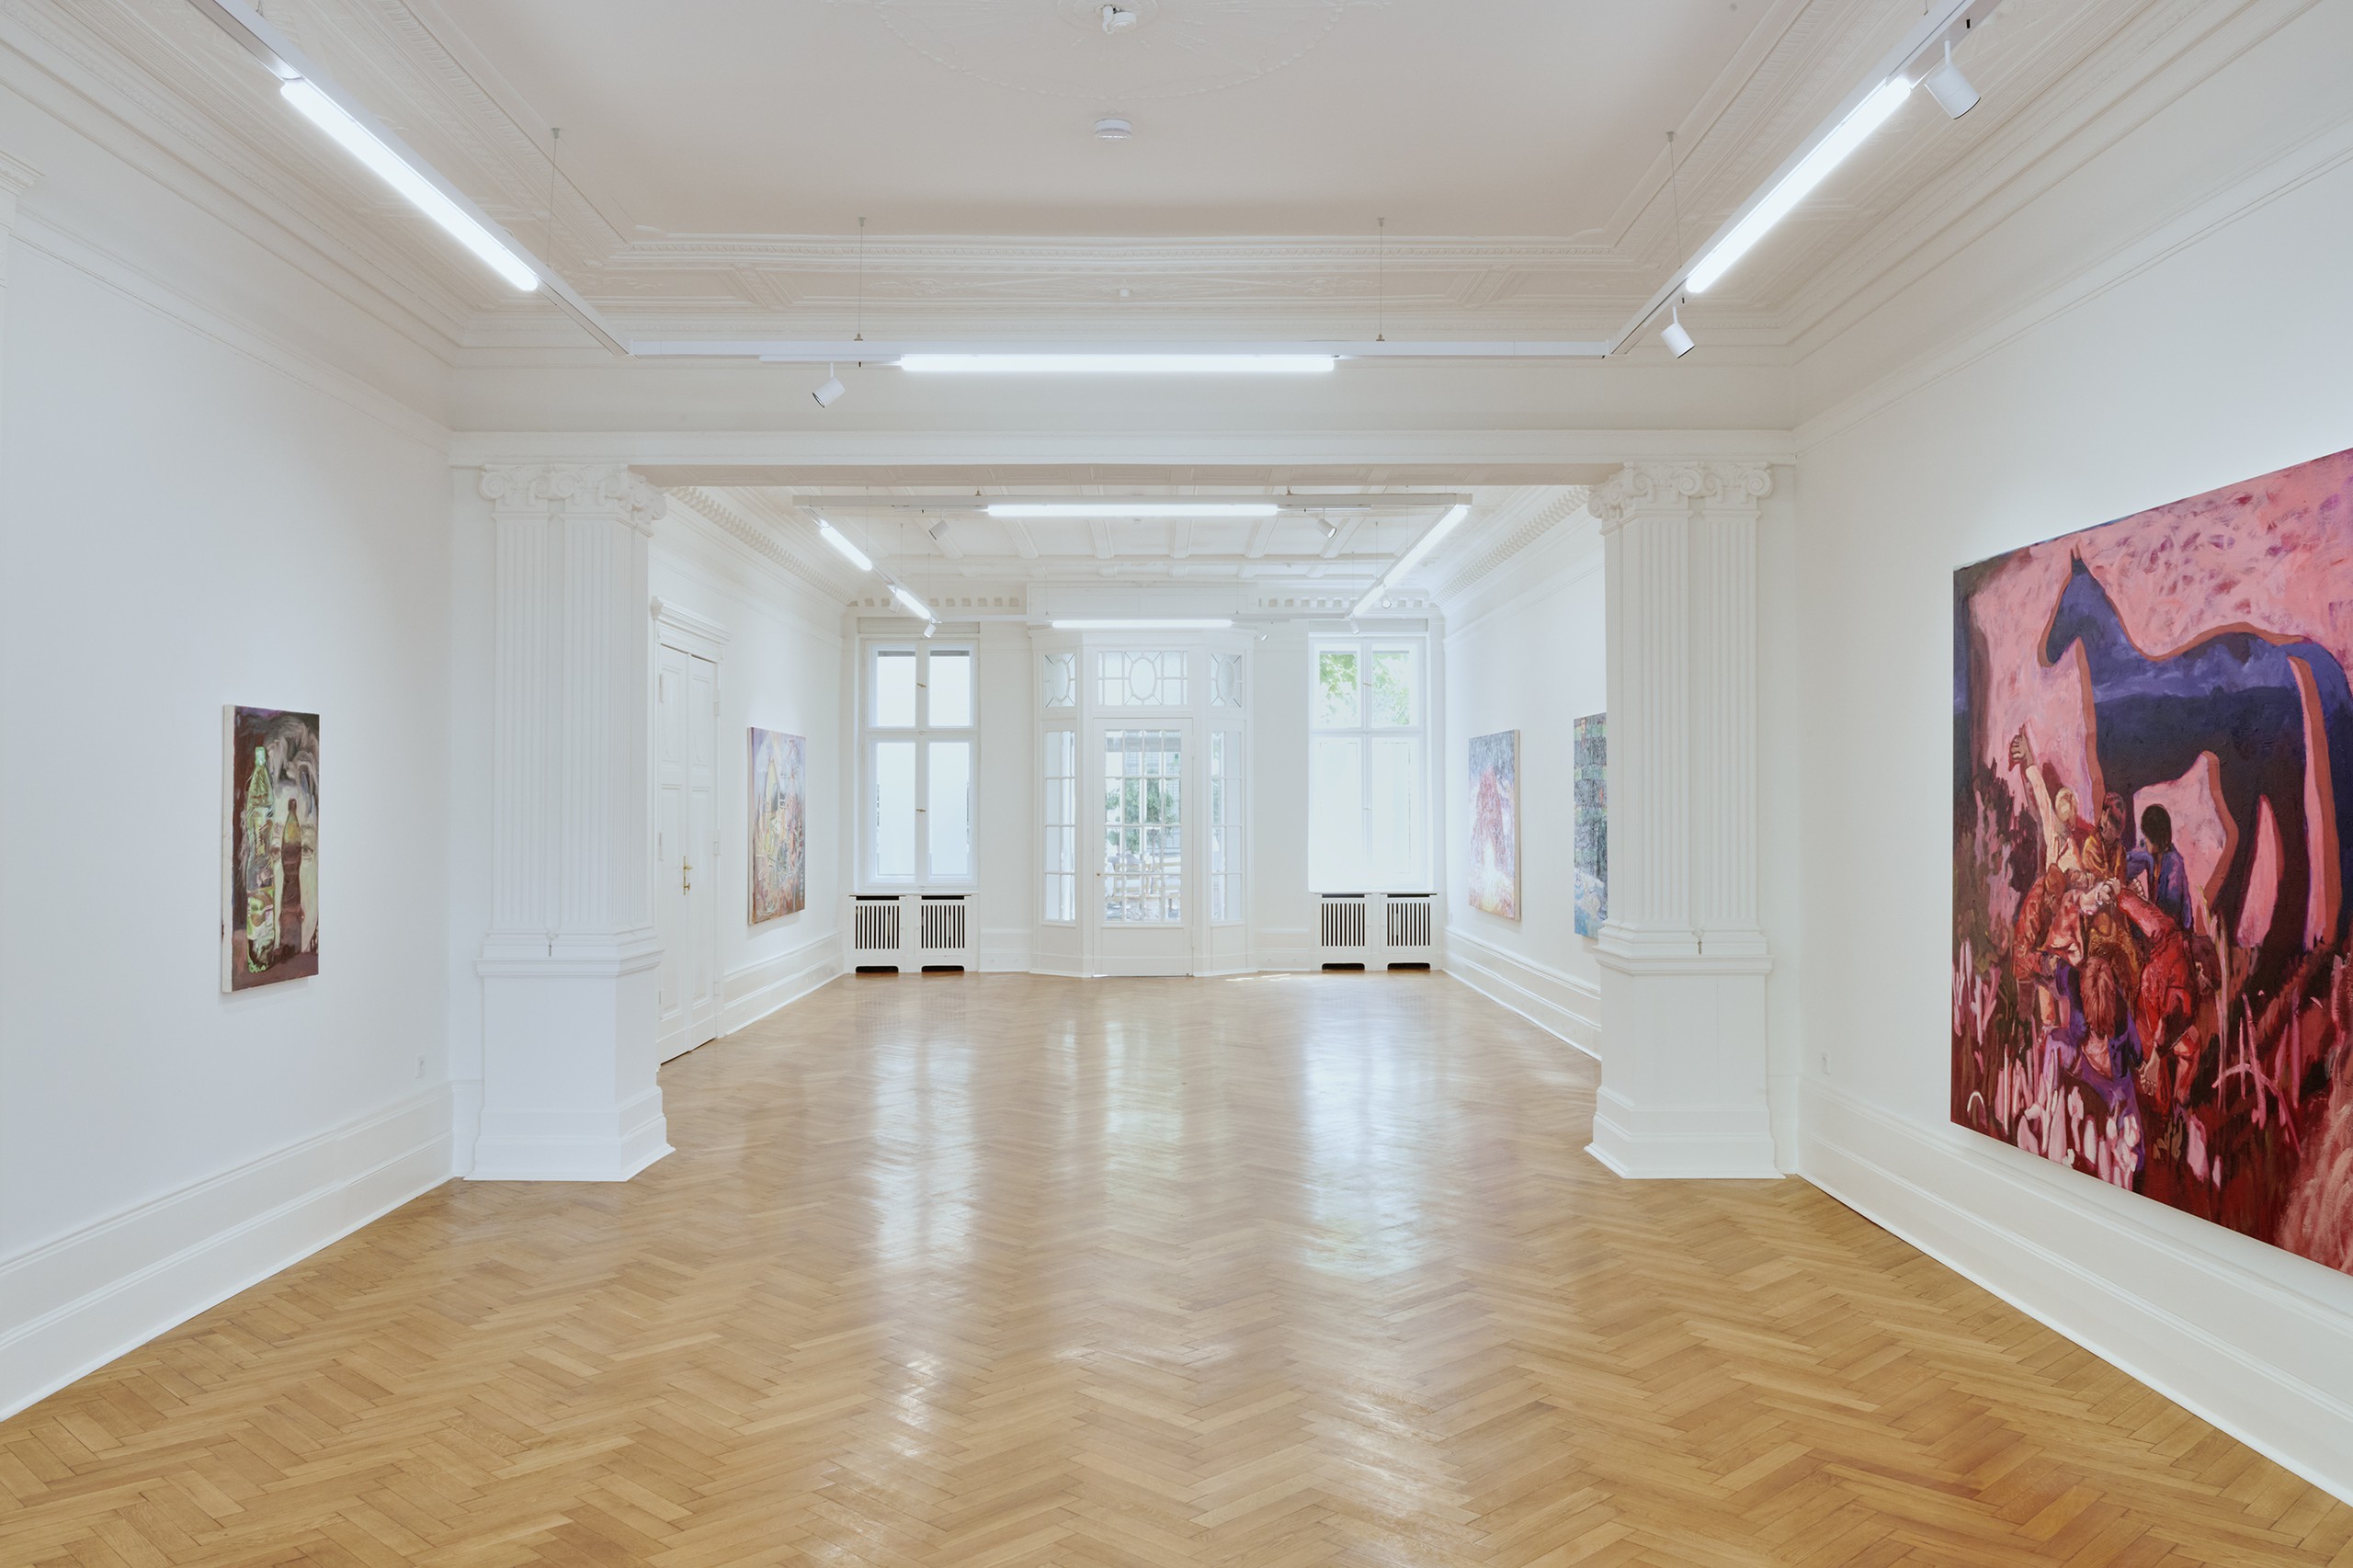 Installation view, Hive Mind, Société, Berlin, 2021